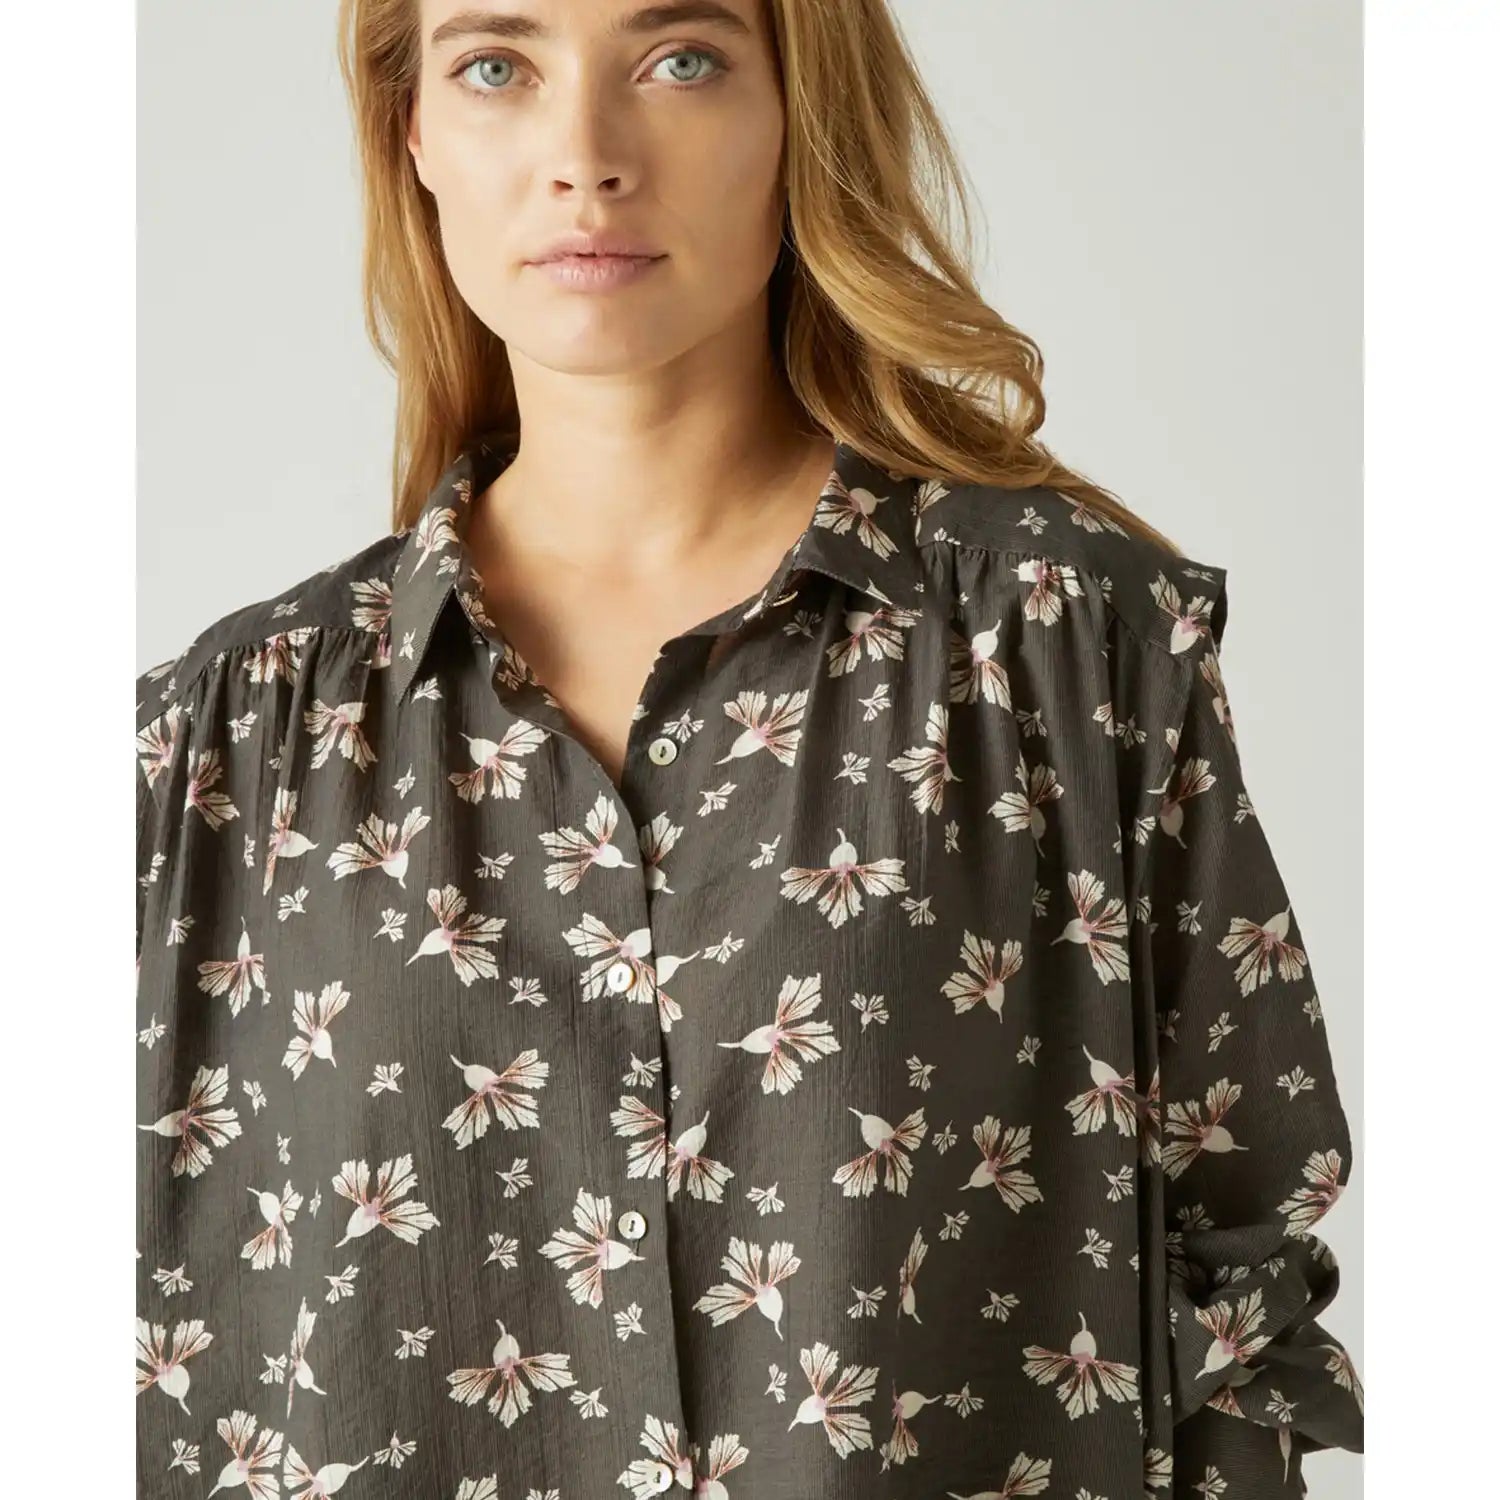 Couchel Flowers Print Shirt - Multi Grey 2 Shaws Department Stores